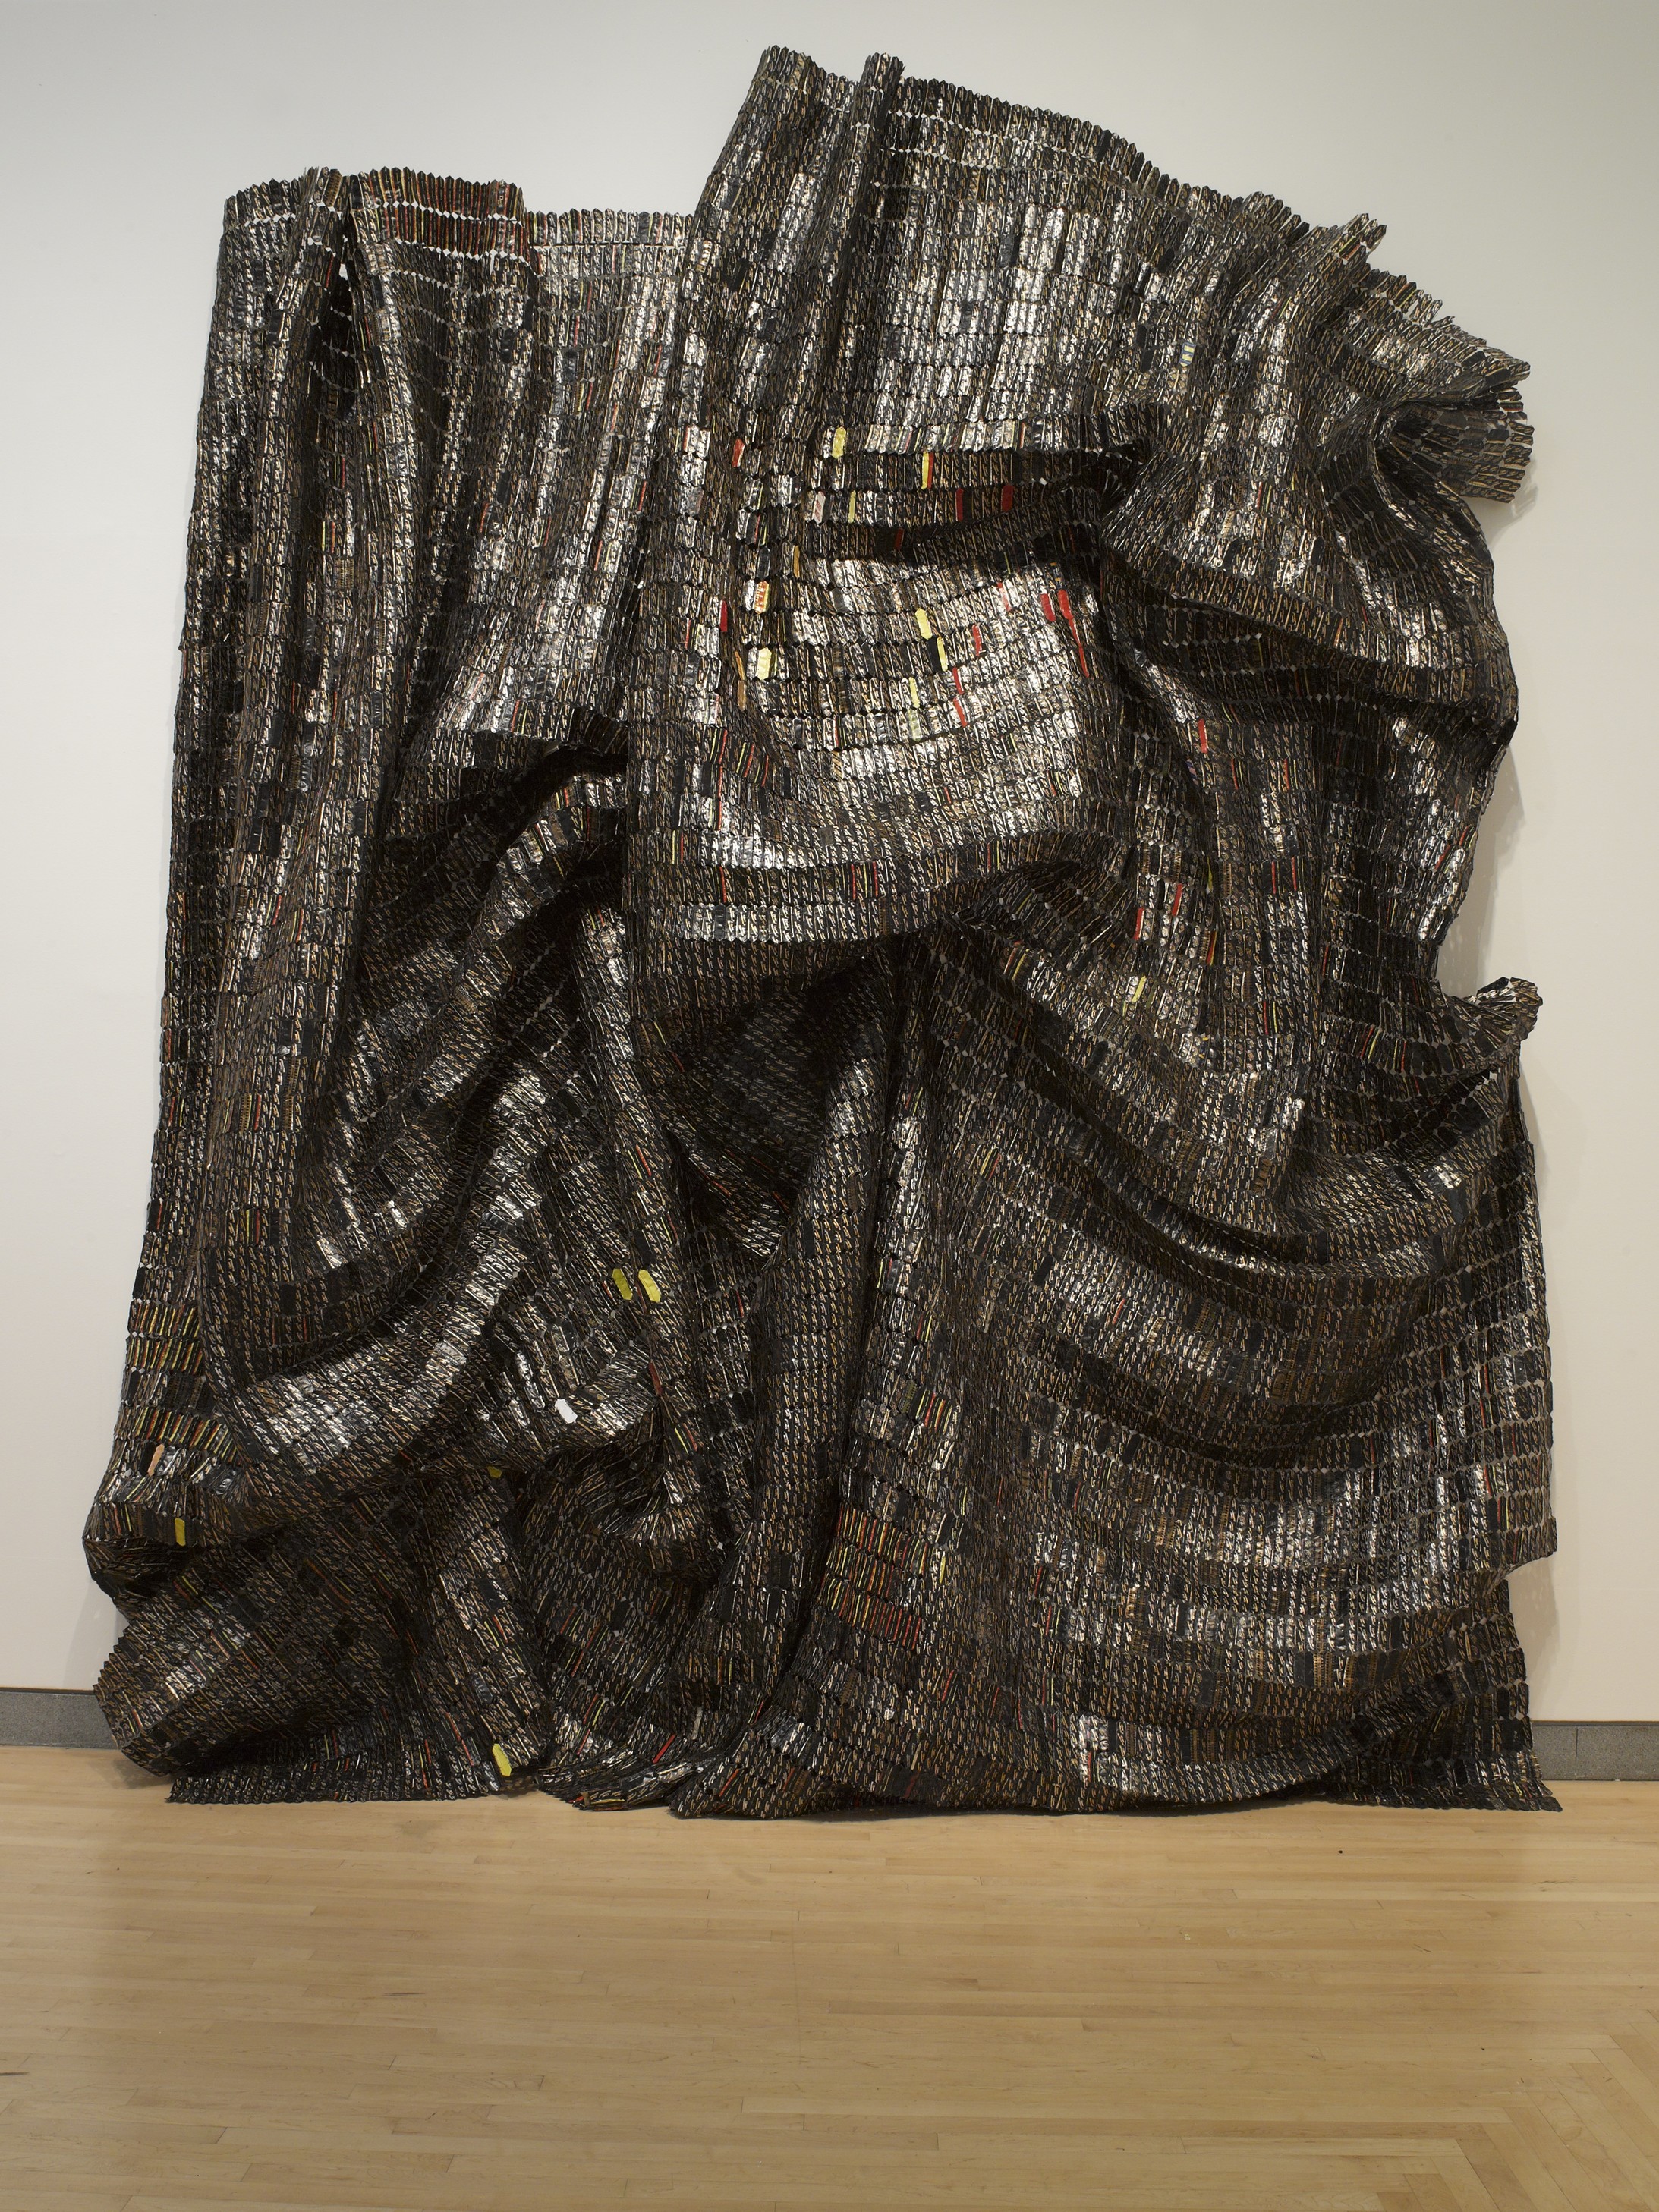 El Anatsui: Black Block, 2010, Aluminium und Kupferdraht, zwei Teile, je 525,8 x 339,1 cm, 30 und 39 kg, Brooklyn Museum, Bequest of William K. Jacobs, Jr., by exchange, 2013.7a-b, © El Anatsui